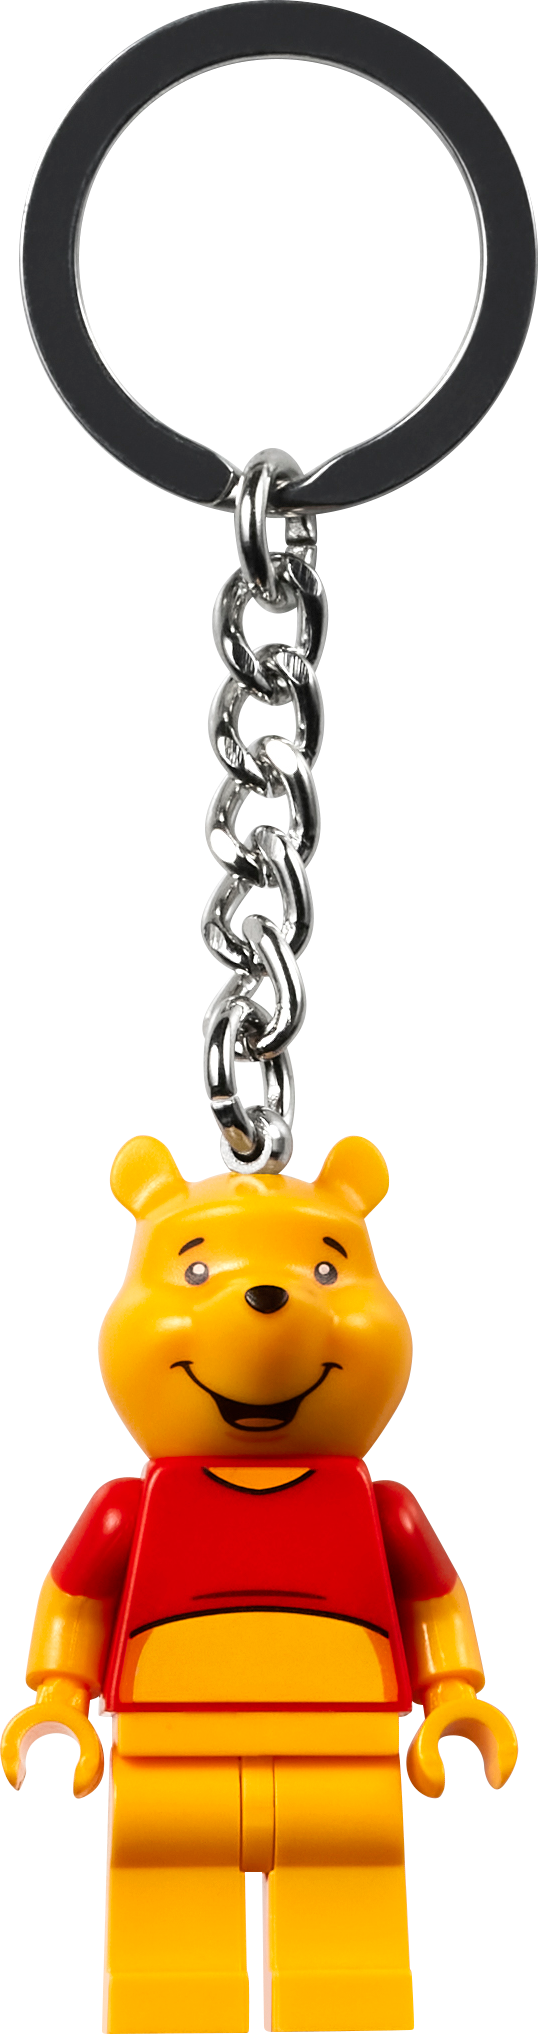 Winnie the Pooh Key Chain